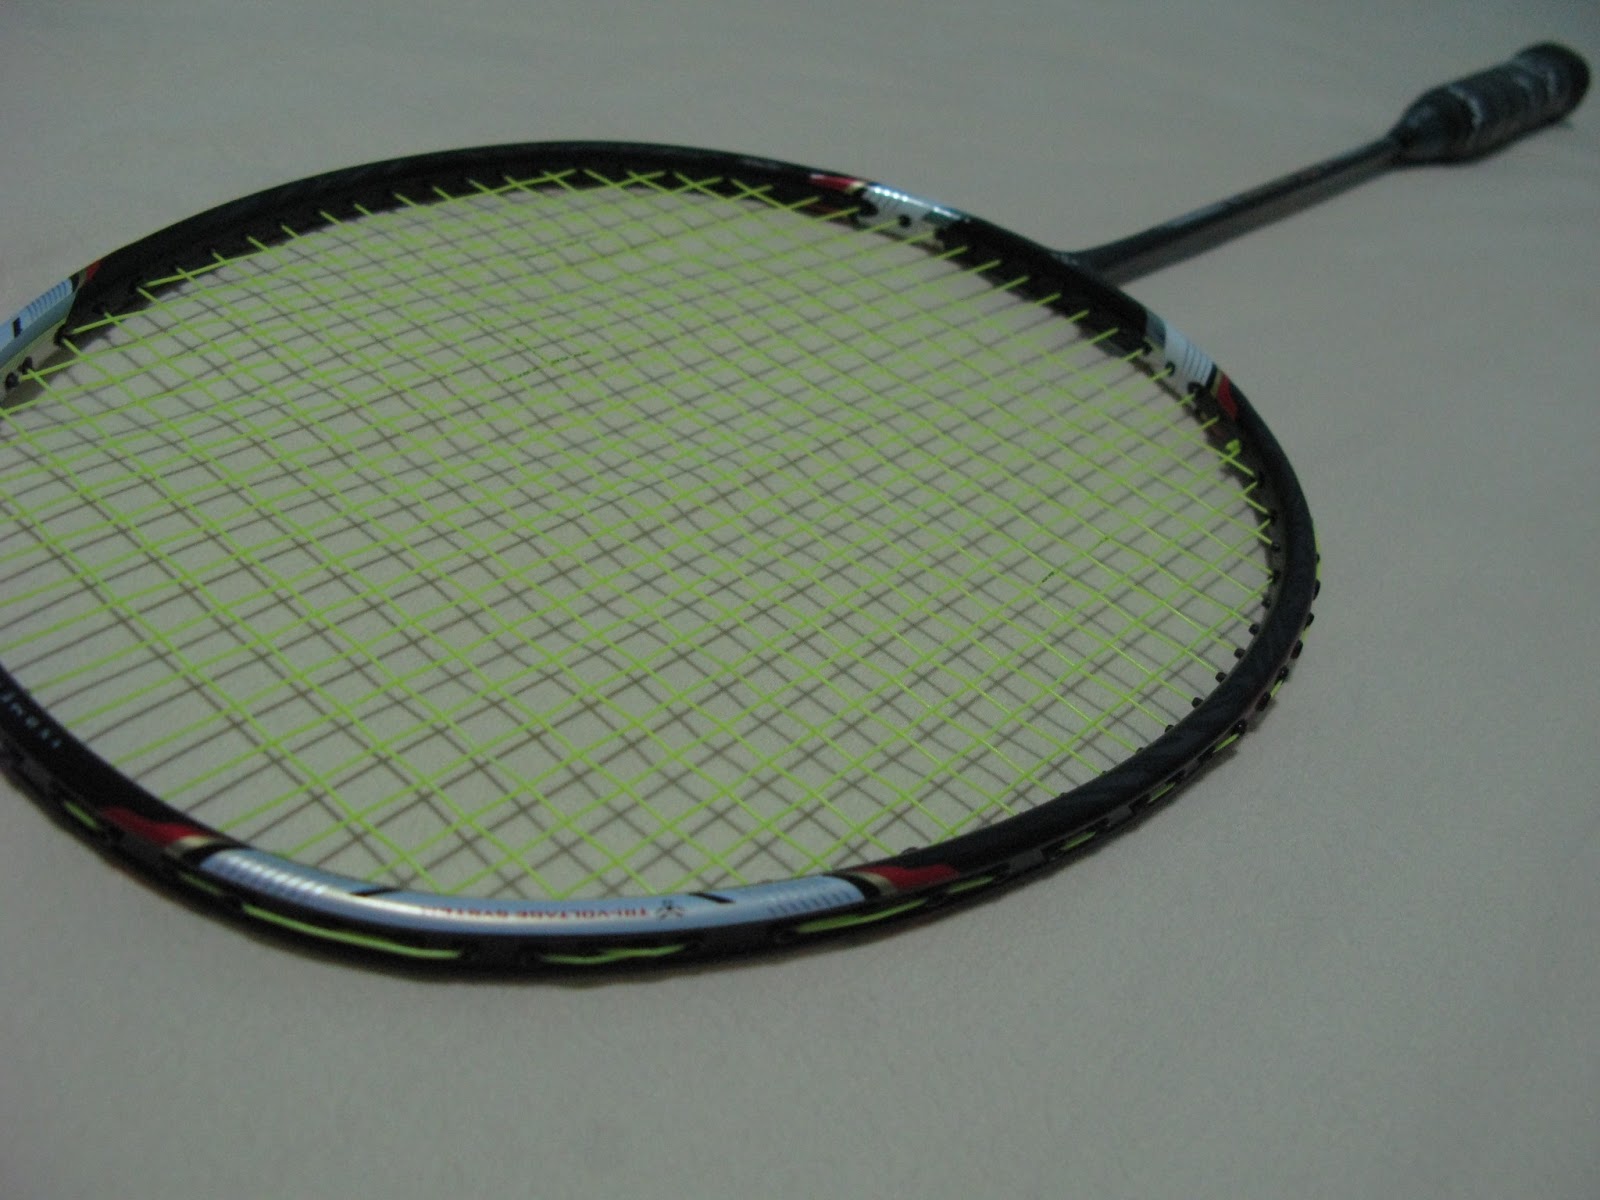 Of badminton things: Badminton Racket Review: Yonex Voltric 70